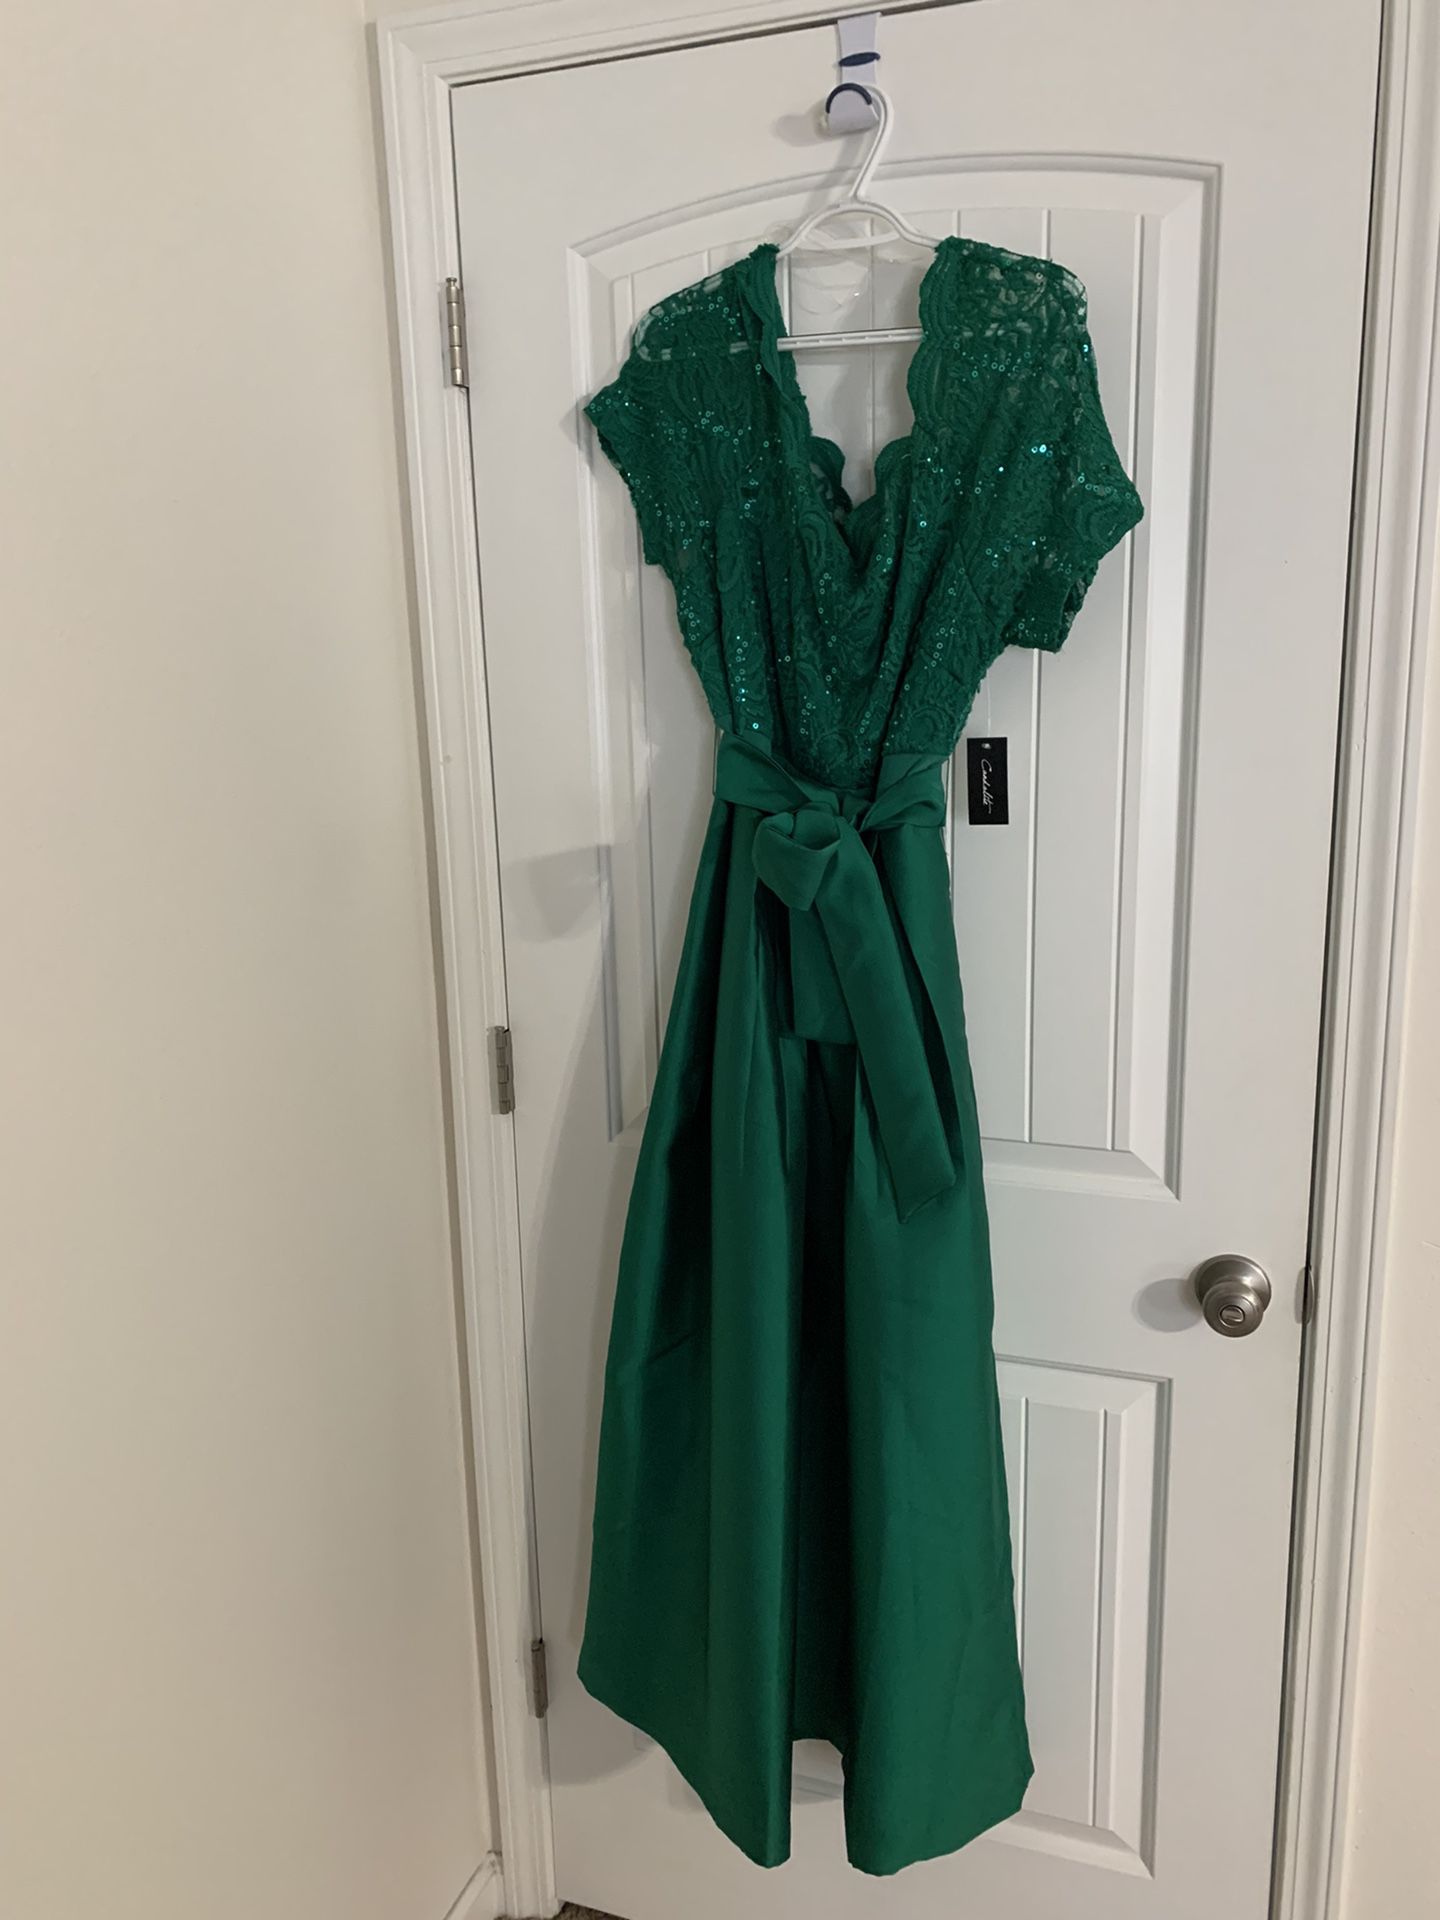 New size 14 prom dress